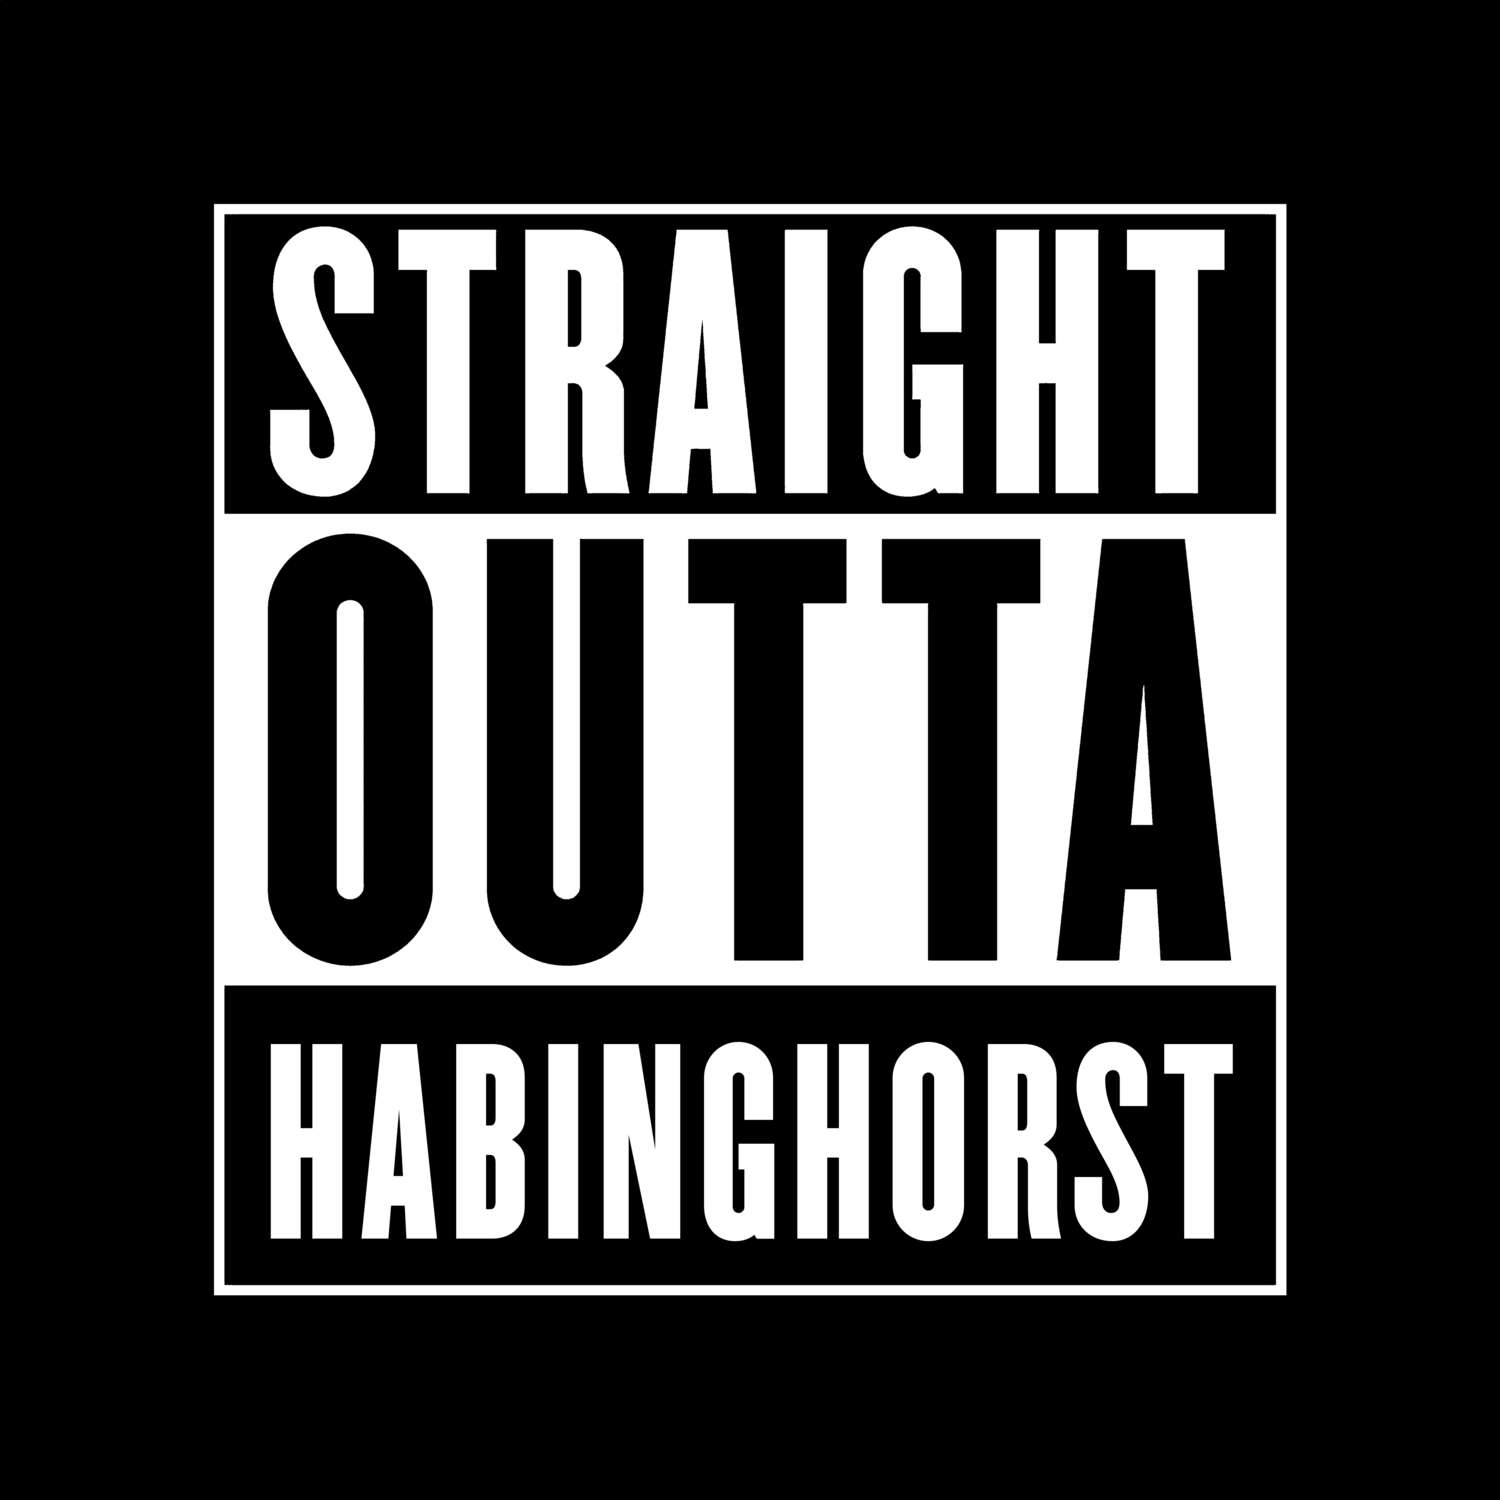 Habinghorst T-Shirt »Straight Outta«